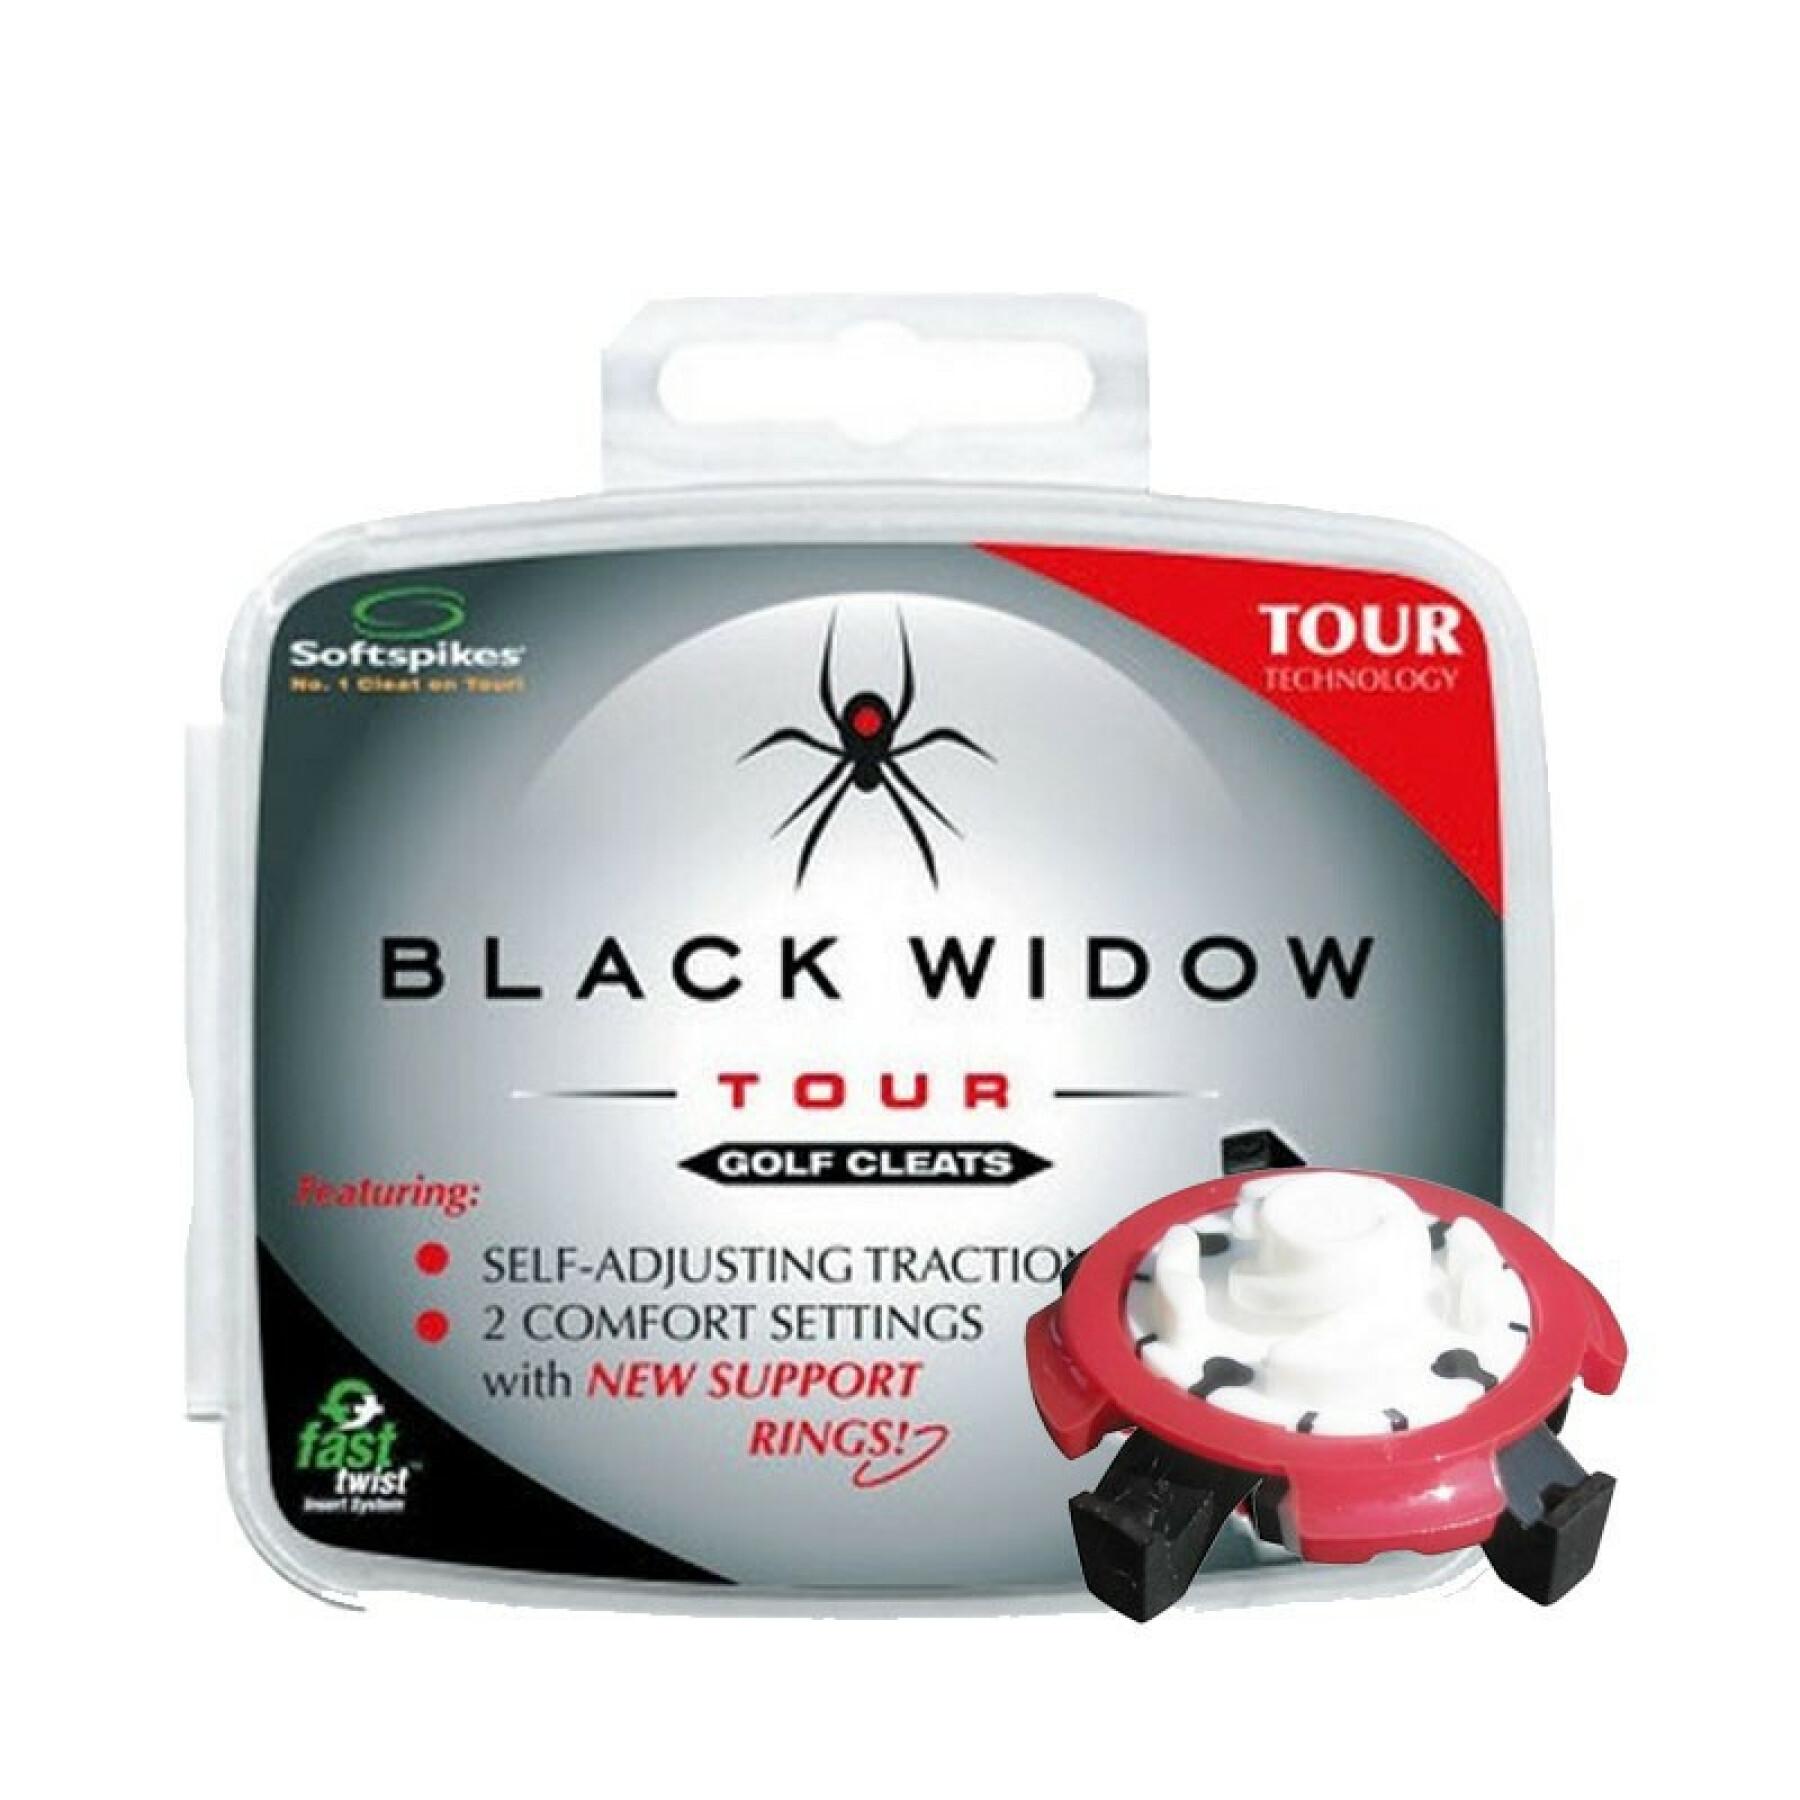 Crampons Softspikes Black Widow tour fast twist